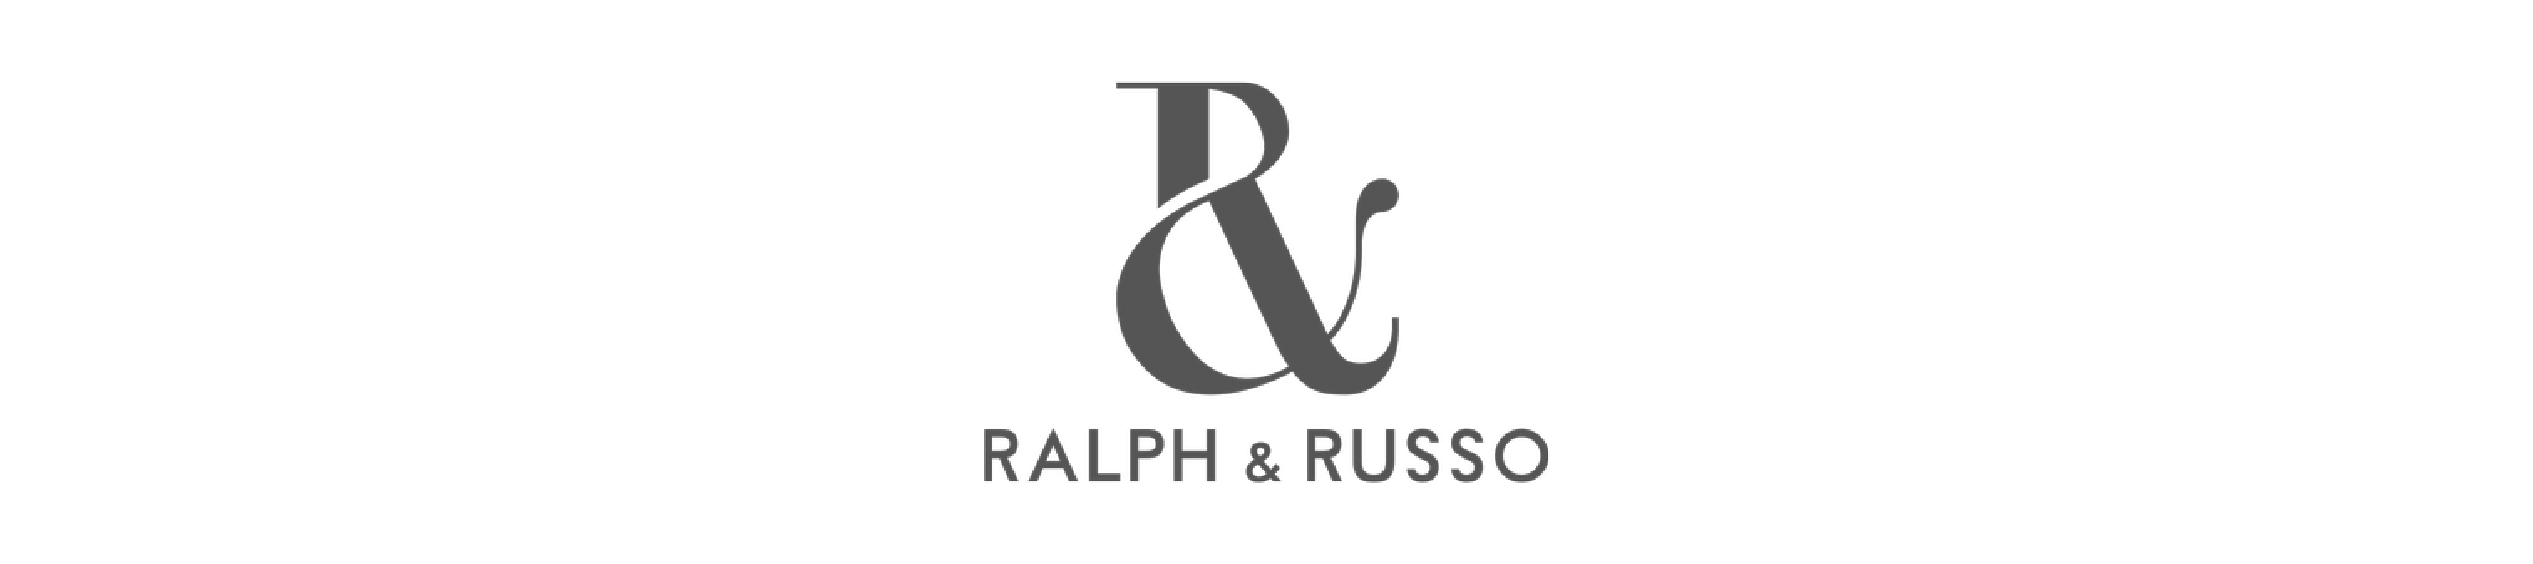 RalphRusso logo